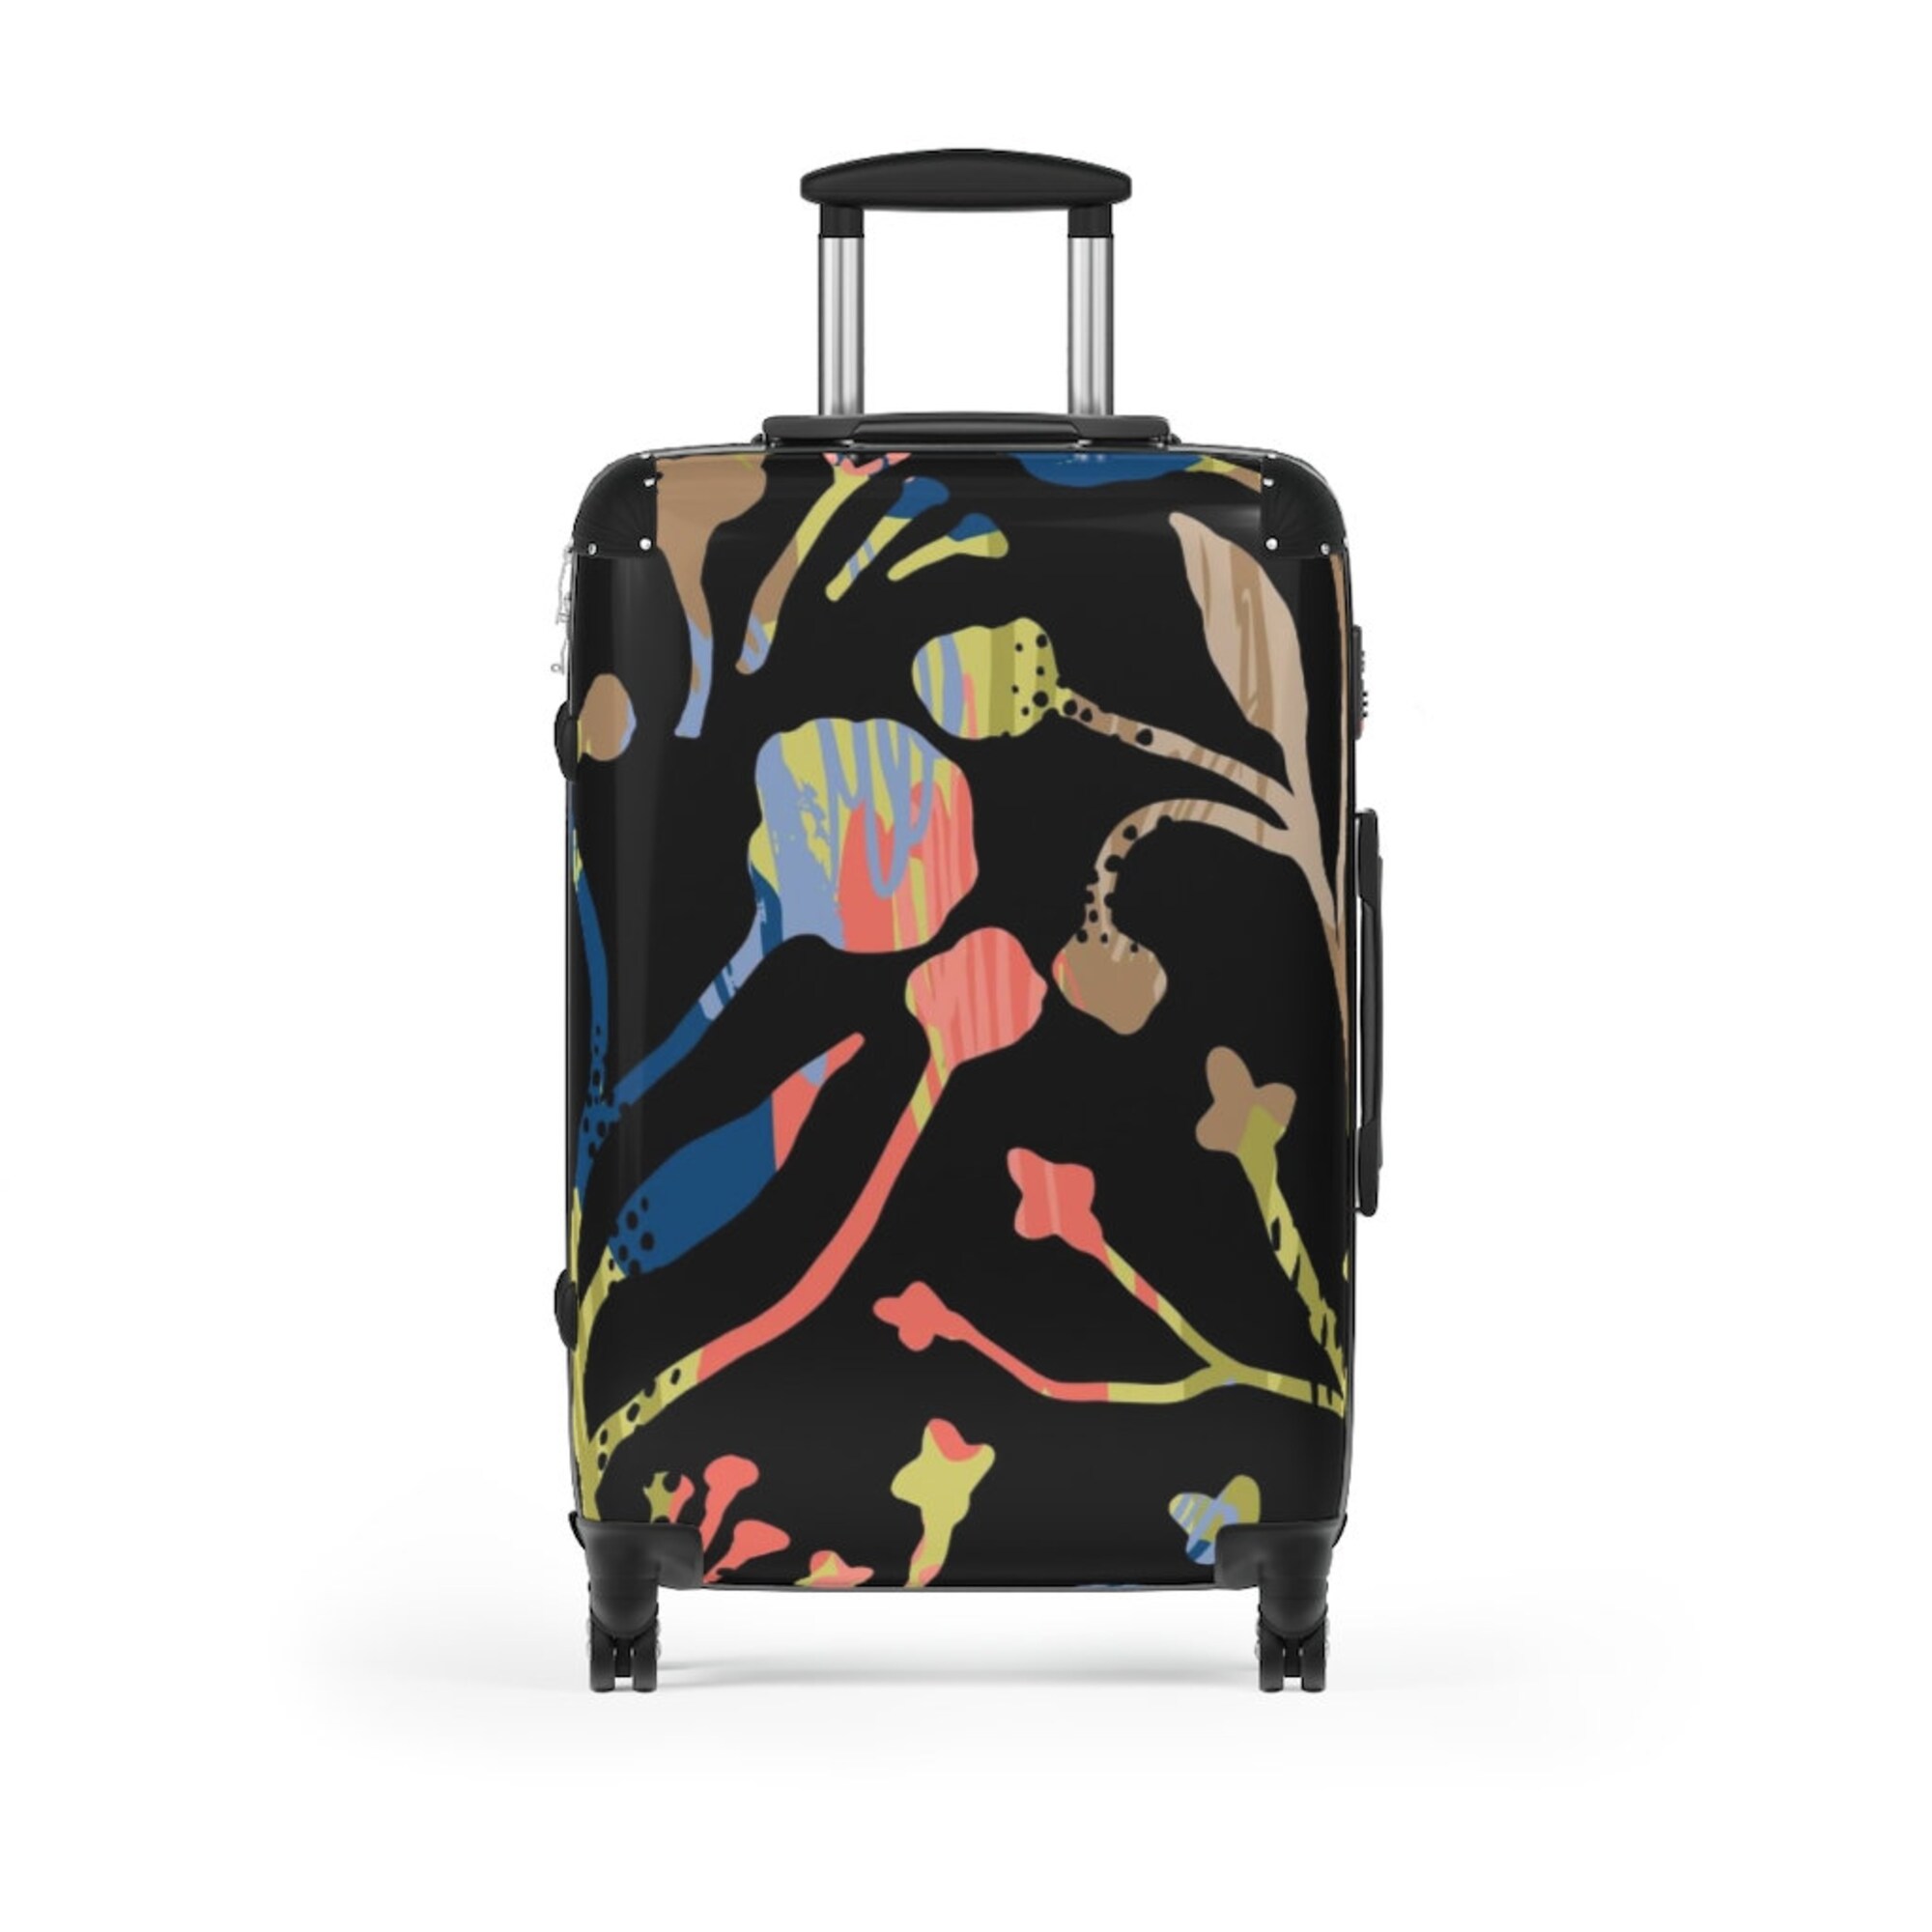 The Payton Suitcase